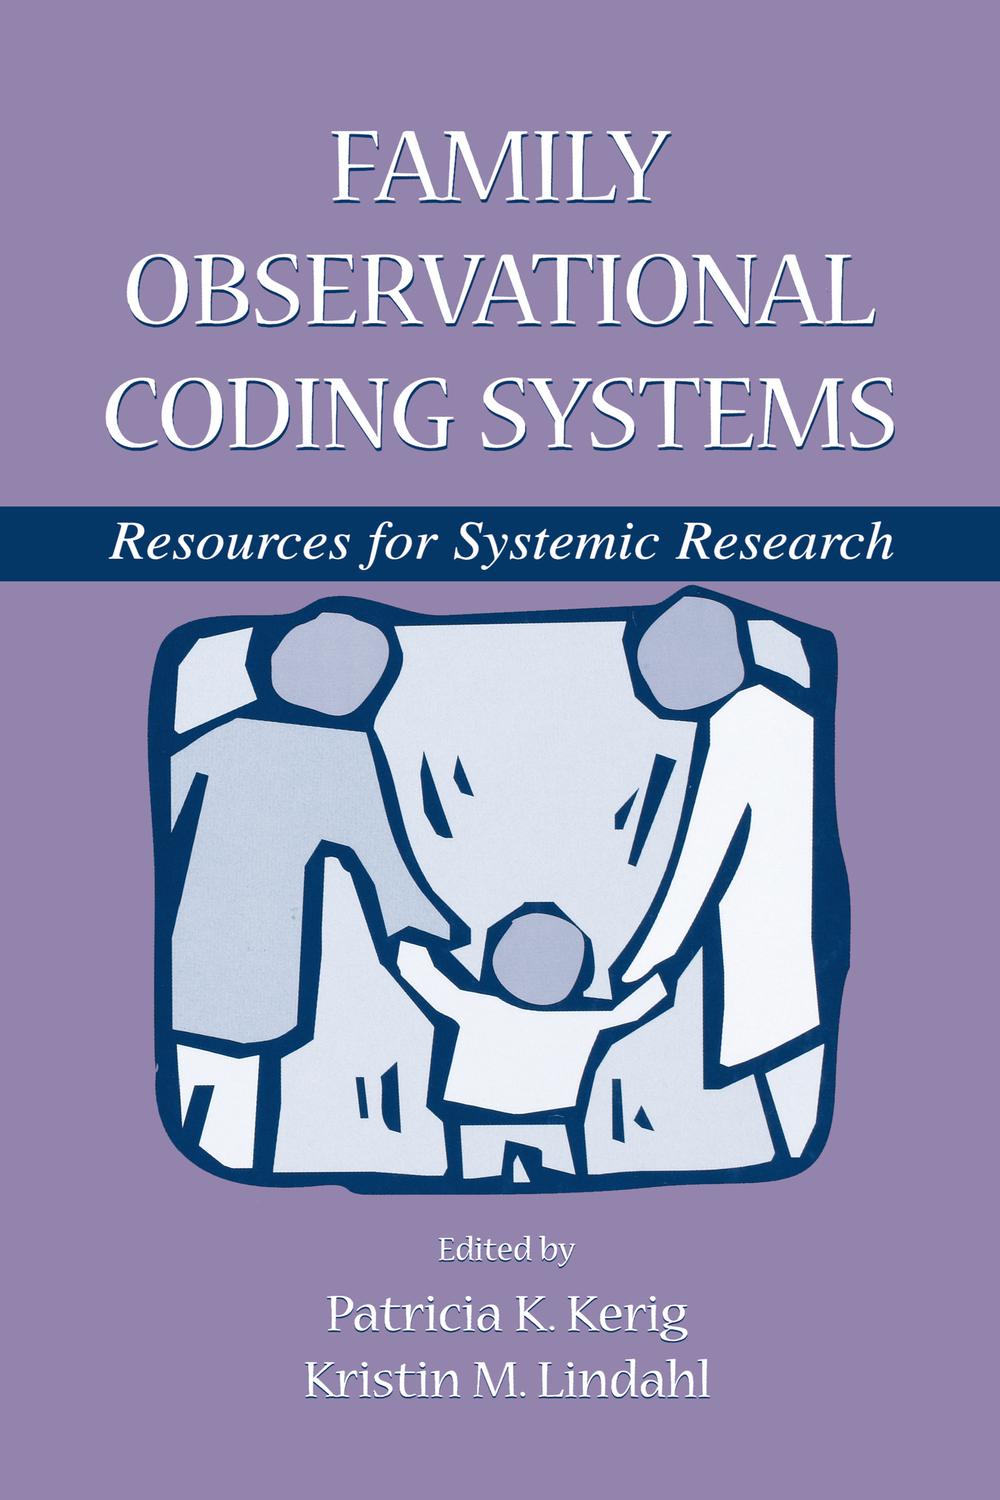 Family Observational Coding Systems - Patricia K. Kerig, Kristin M. Lindahl